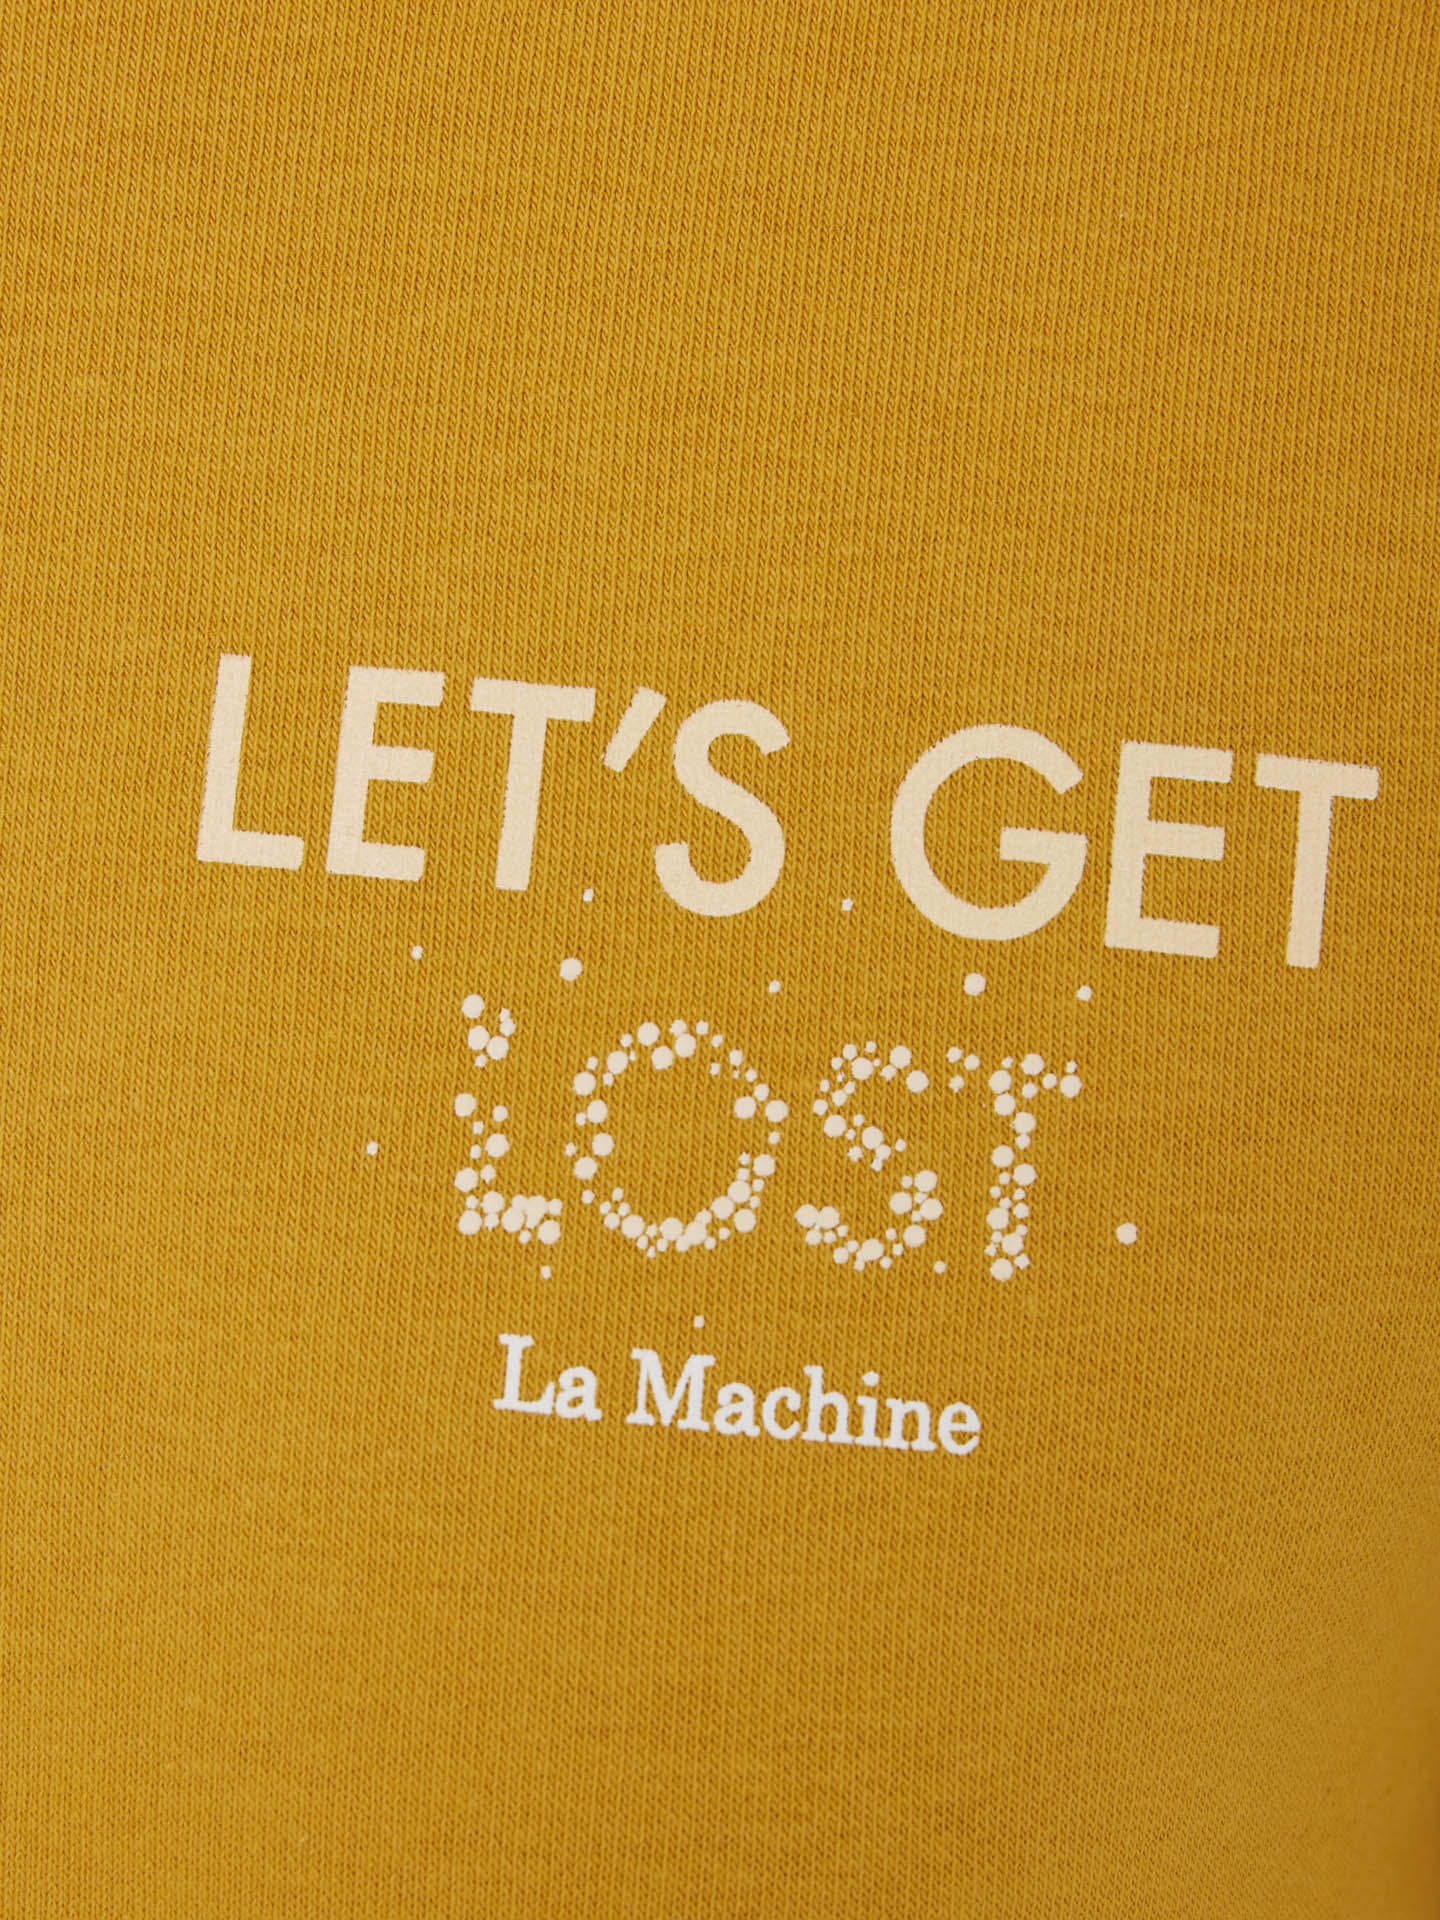 Let's get lost women's sweatshirt - La Machine Cycle Club